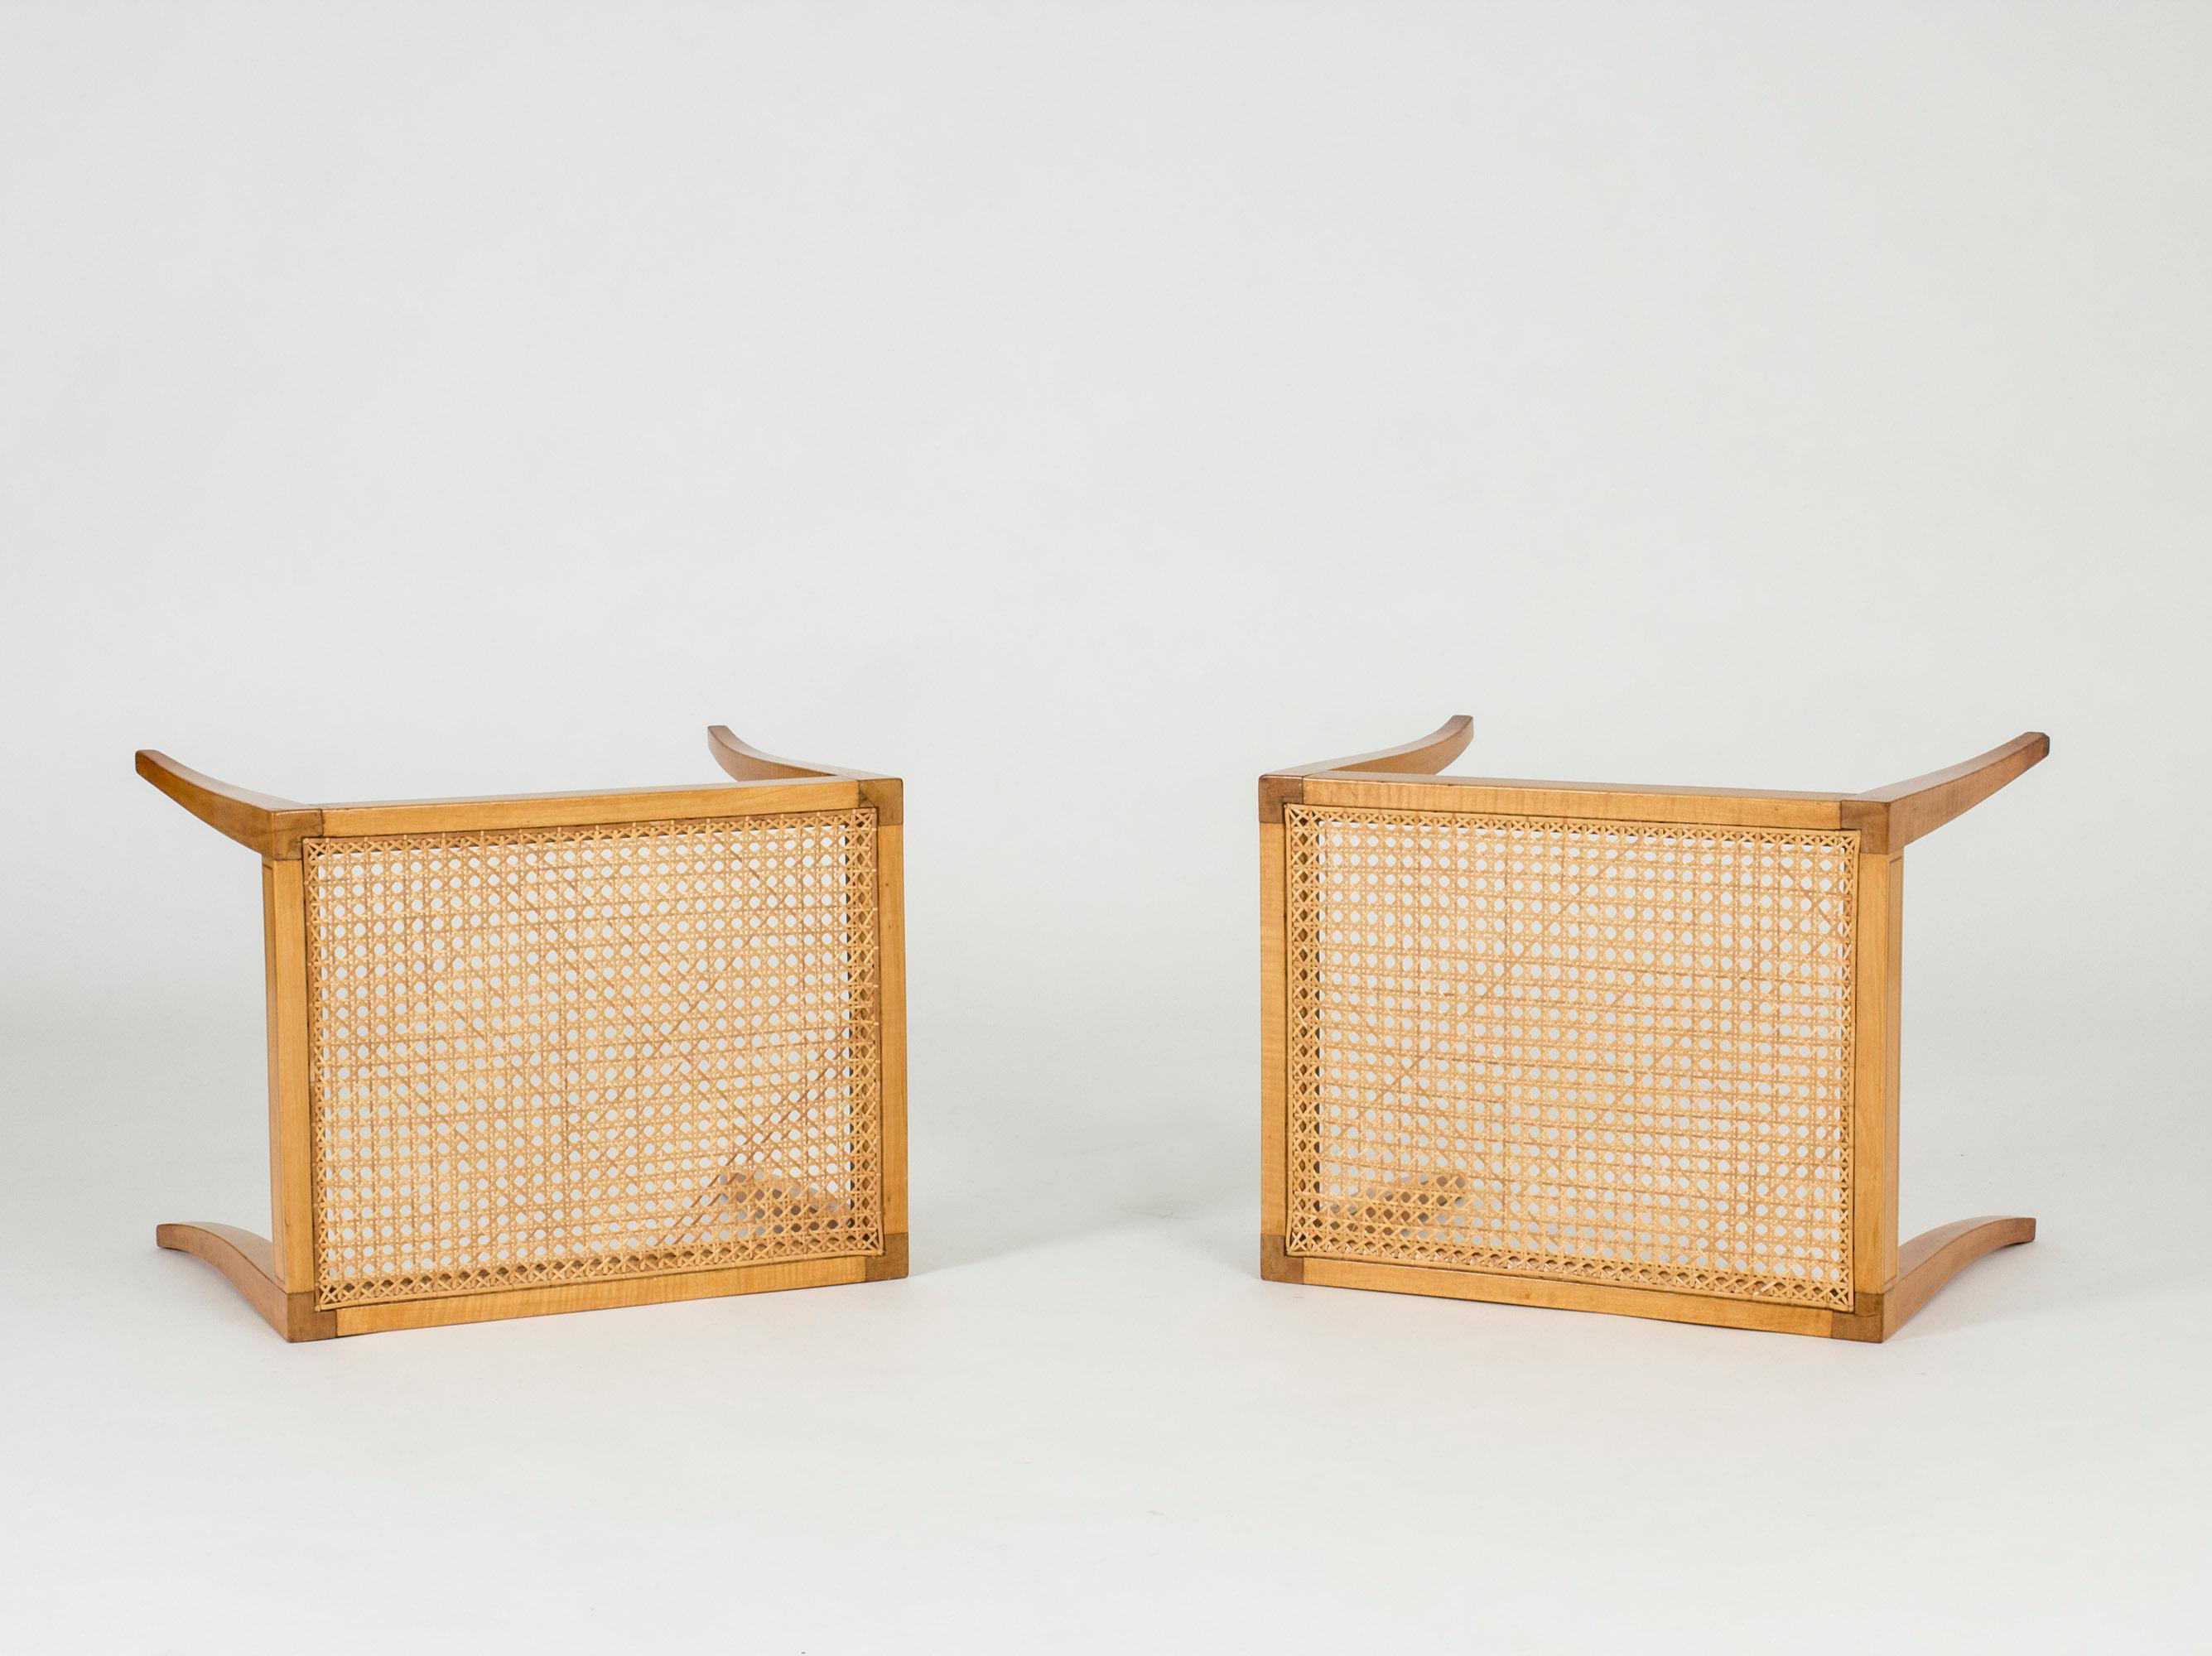 Danish Pair of midcentury stools by Frits Henningsen